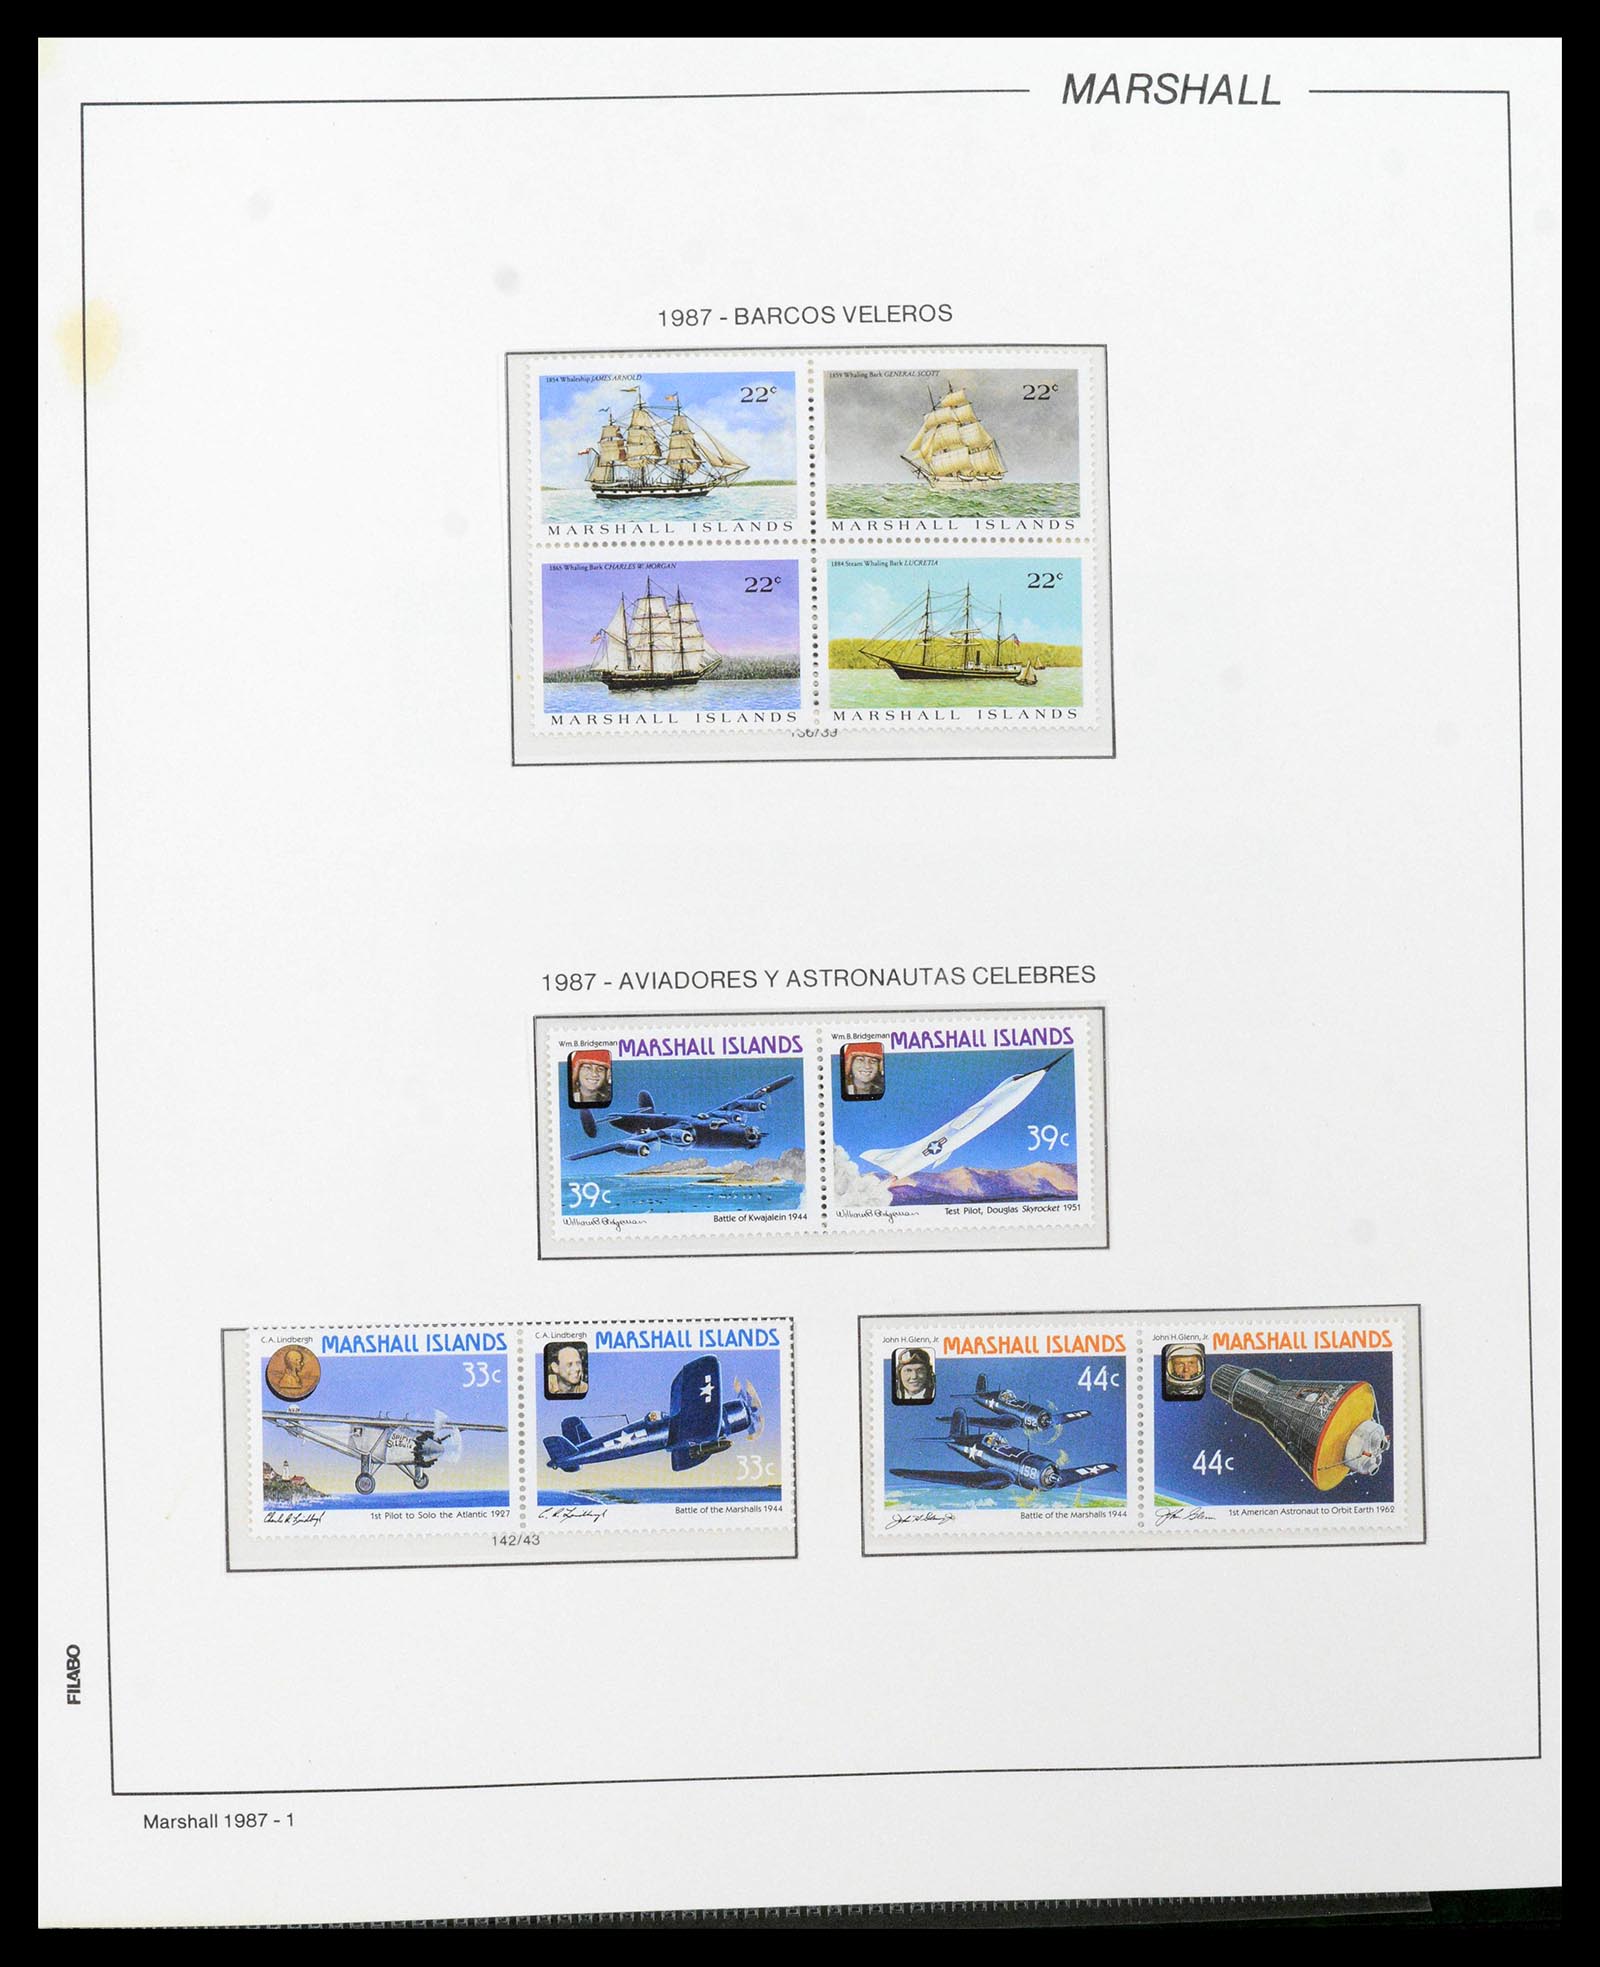 39222 0122 - Stamp collection 39222 Palau, Micronesia and Marshall islands 1980-1995.